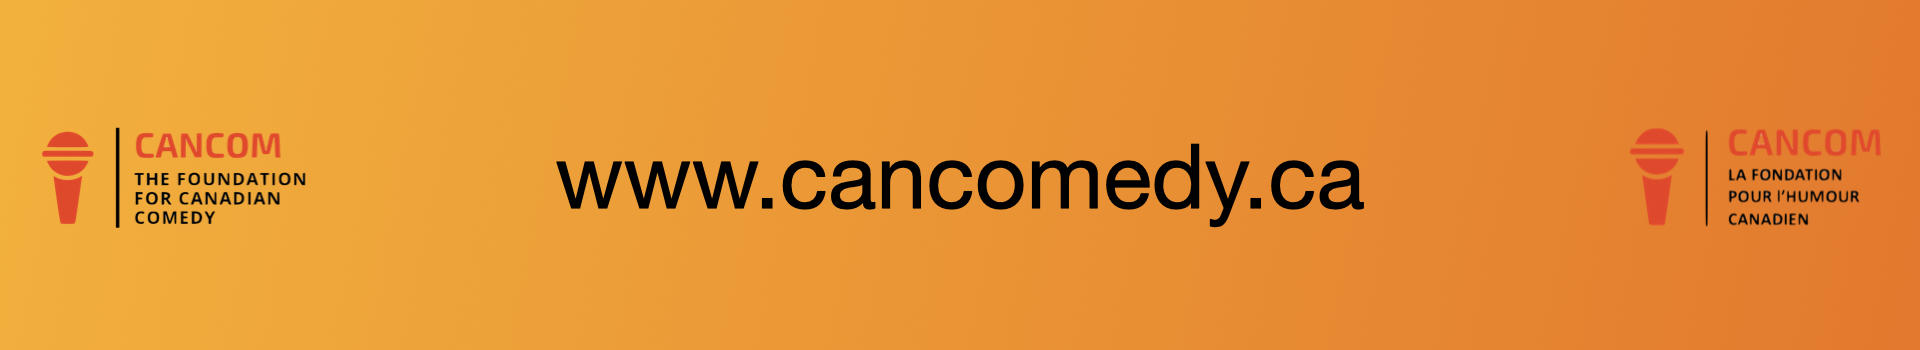 CANCOM Top Banner